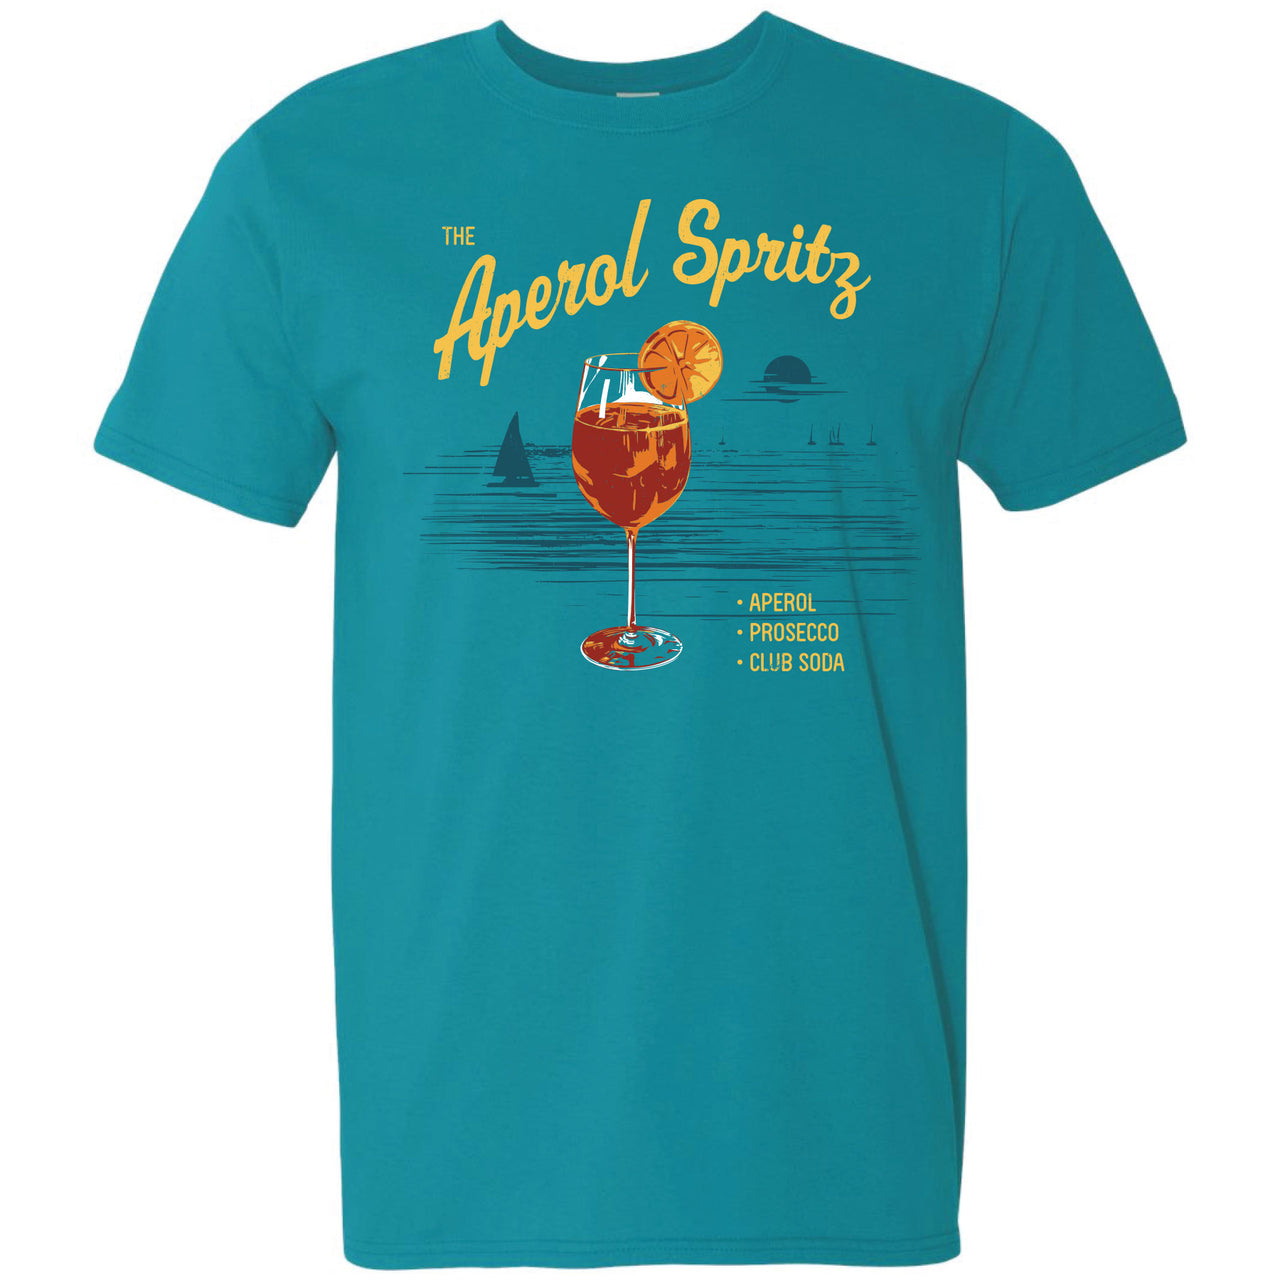 Aperol Spritz Mixed Drink T-shirt